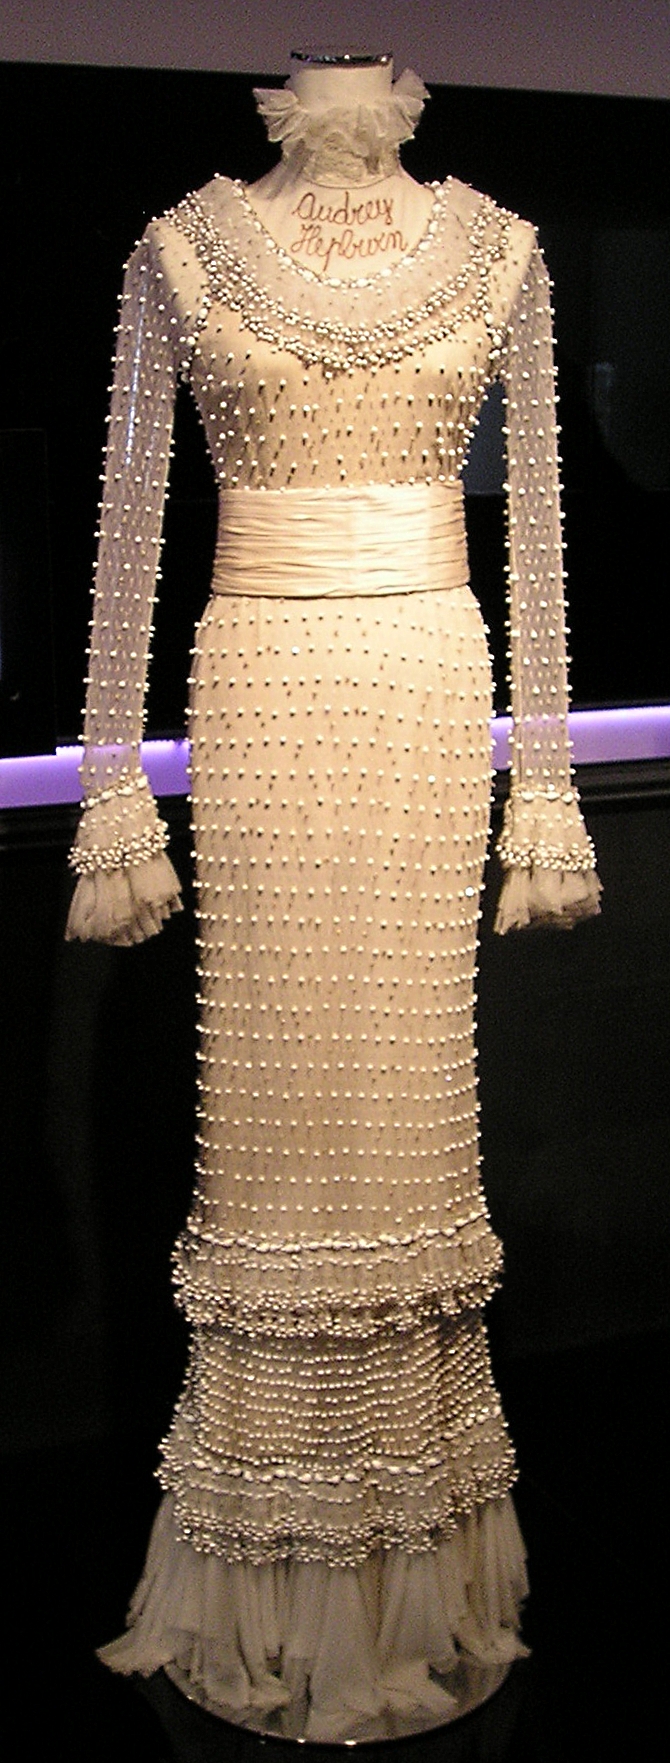 Simple yet elegant sleeveless Audrey Hepburn inspired wedding dress